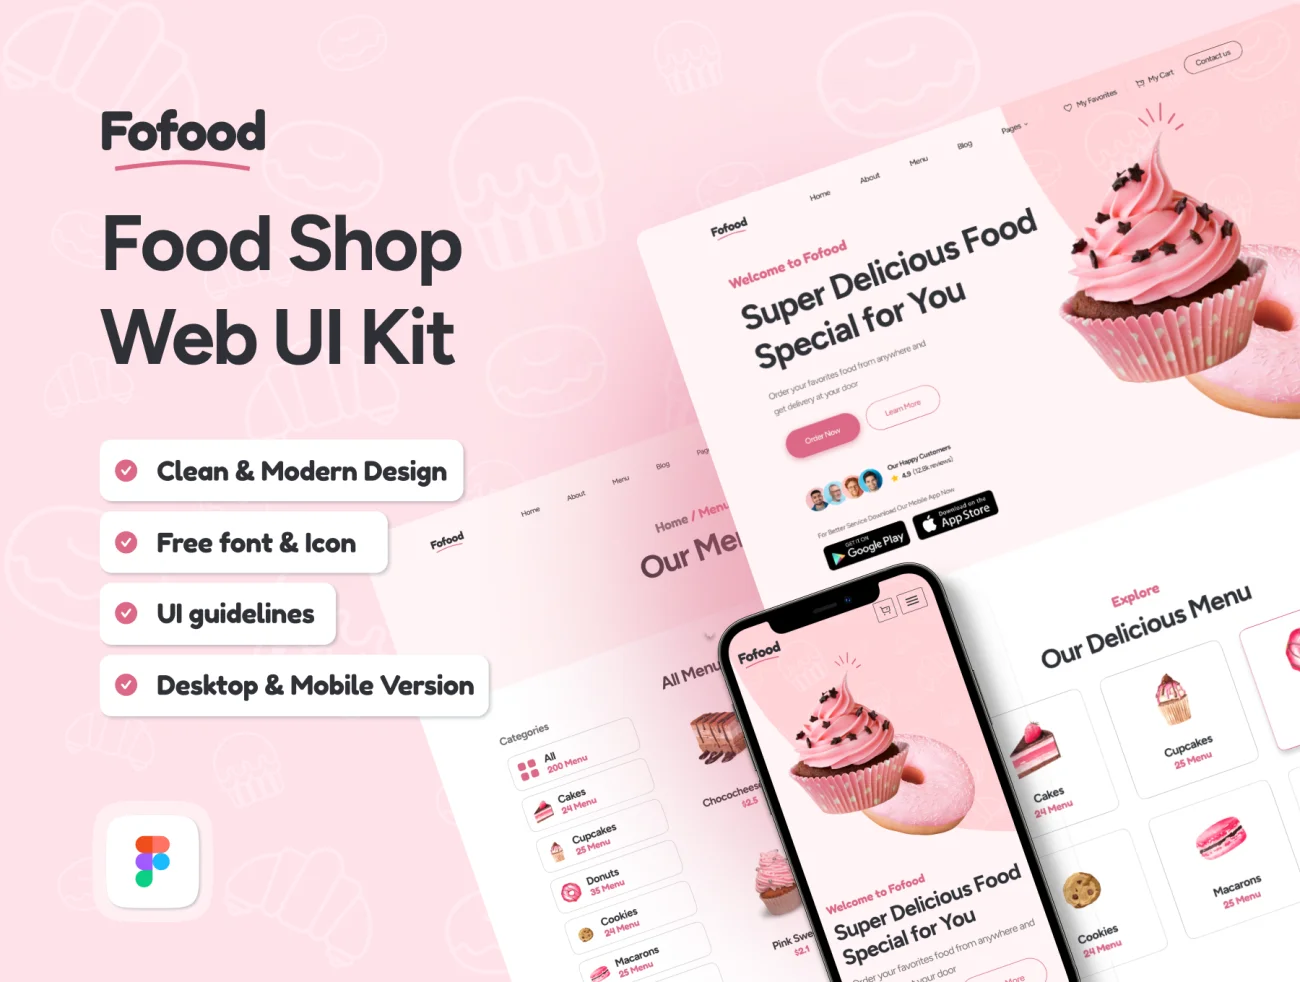 Fofood - 蛋糕点心食品商店应用UI网站设计UI套件 Fofood - Food Shop Web UI Kit fimga格式-UI/UX、ui套件、主页、网站、网购、详情-到位啦UI